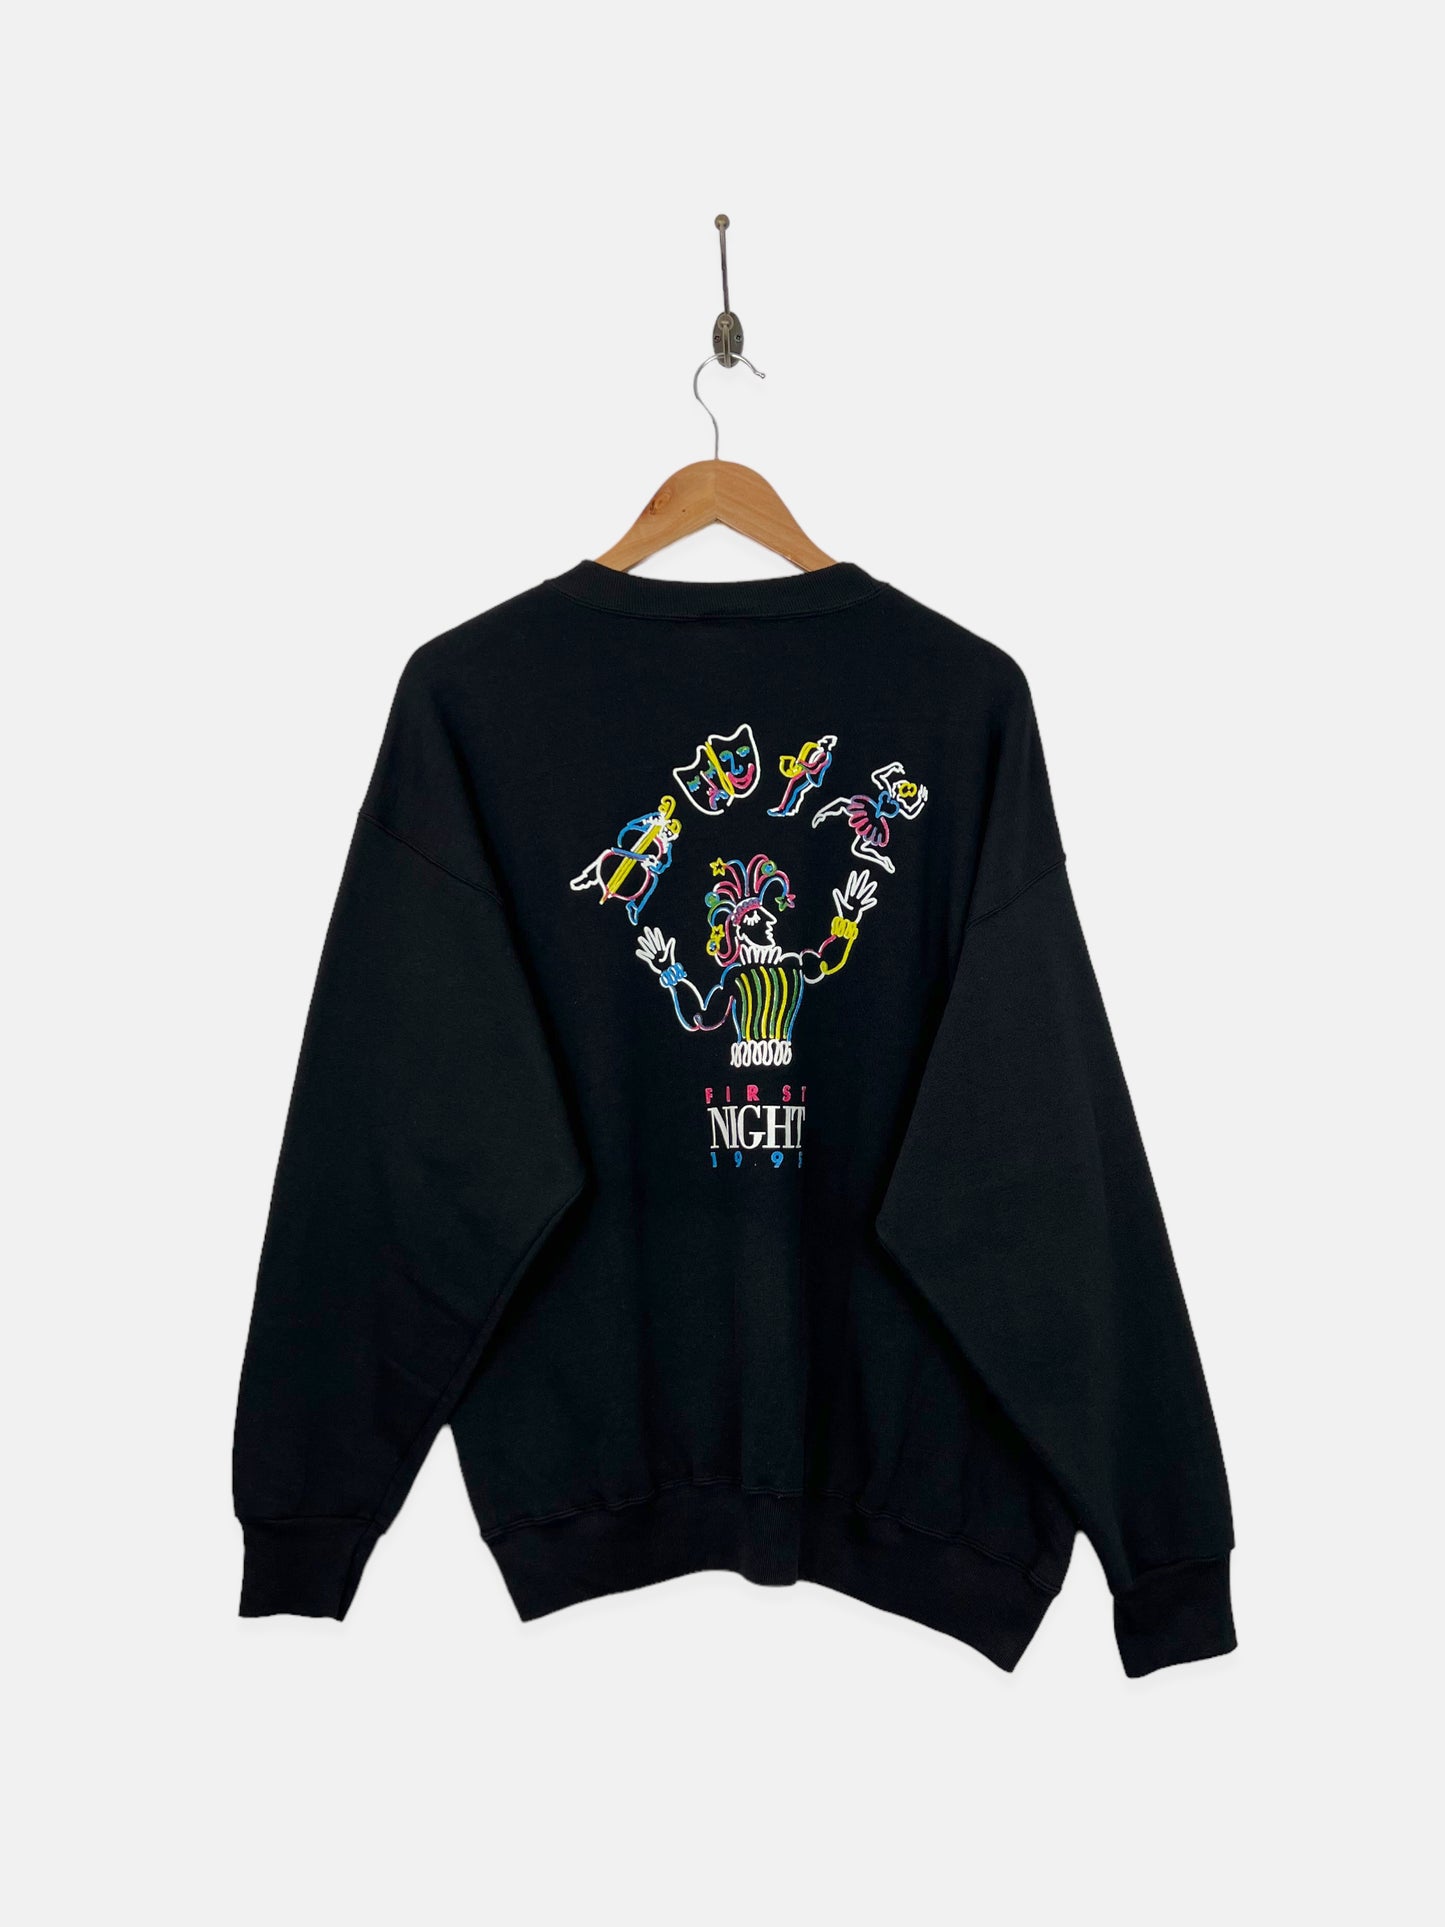 90's Arts Hermosa USA Made Vintage Sweatshirt Size M-L